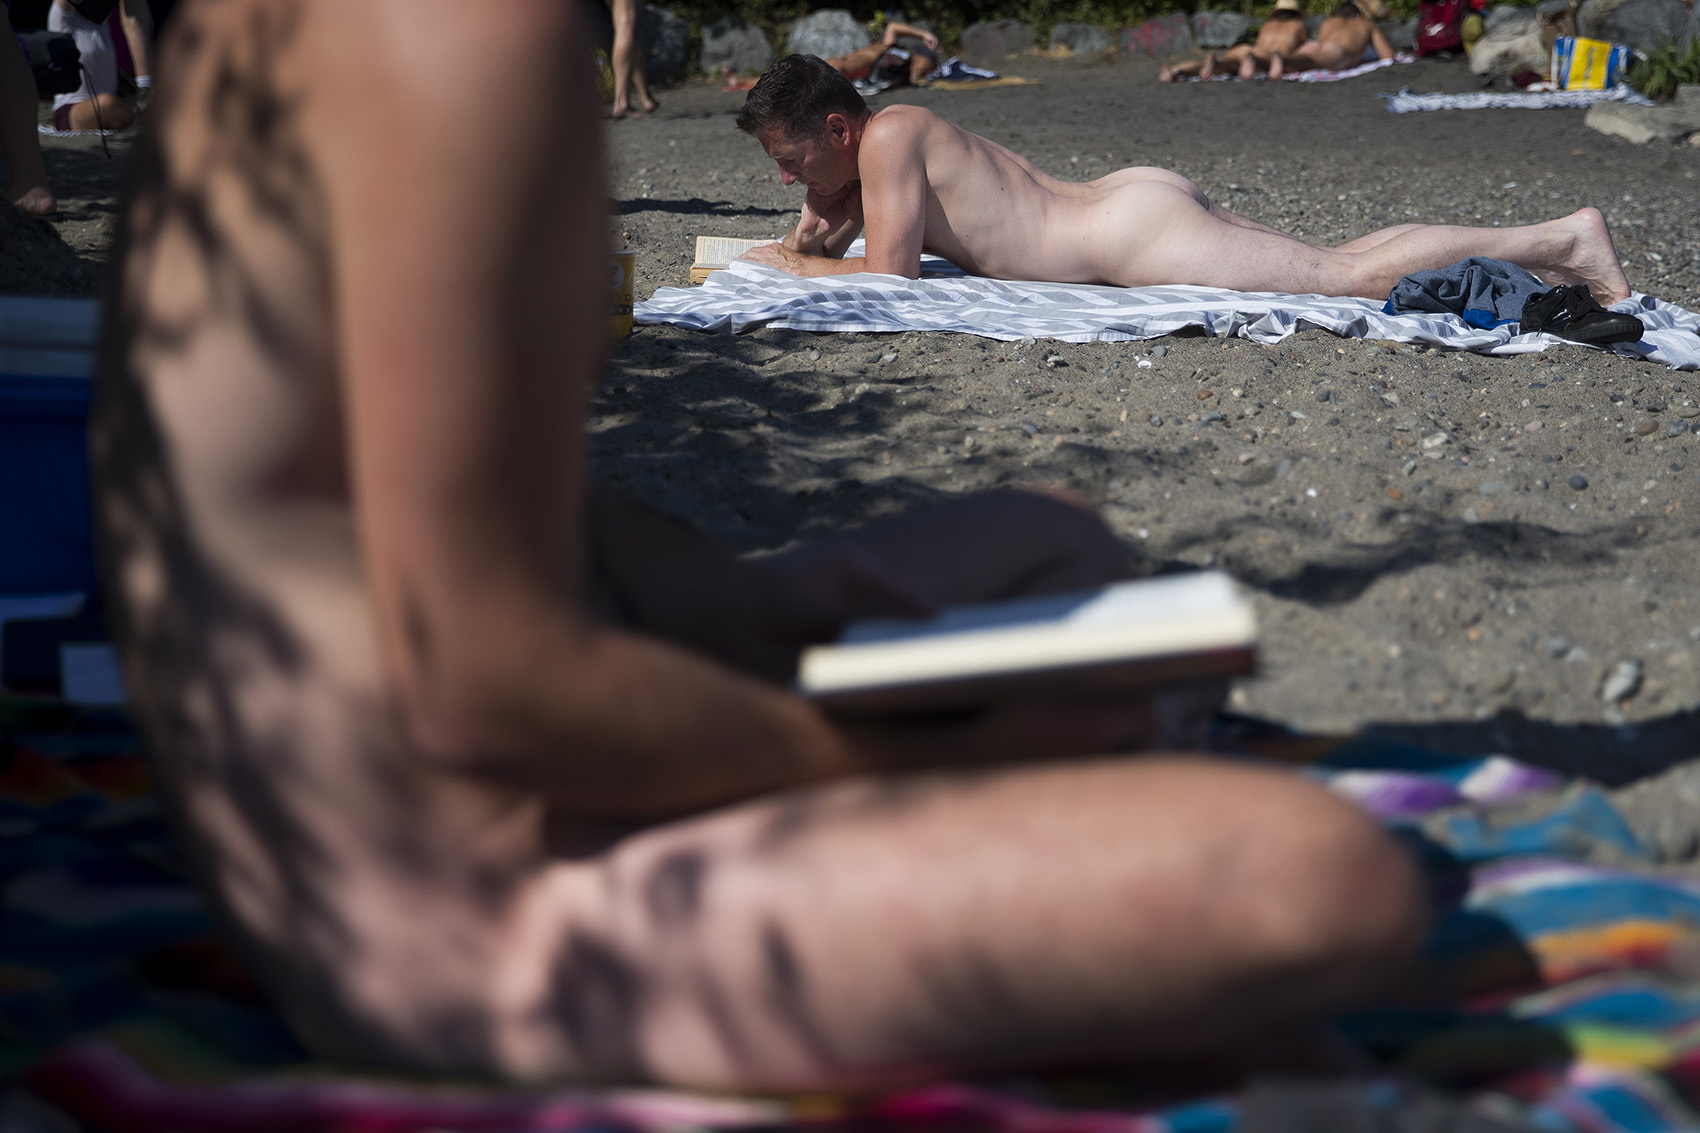 Nude beaches seattle